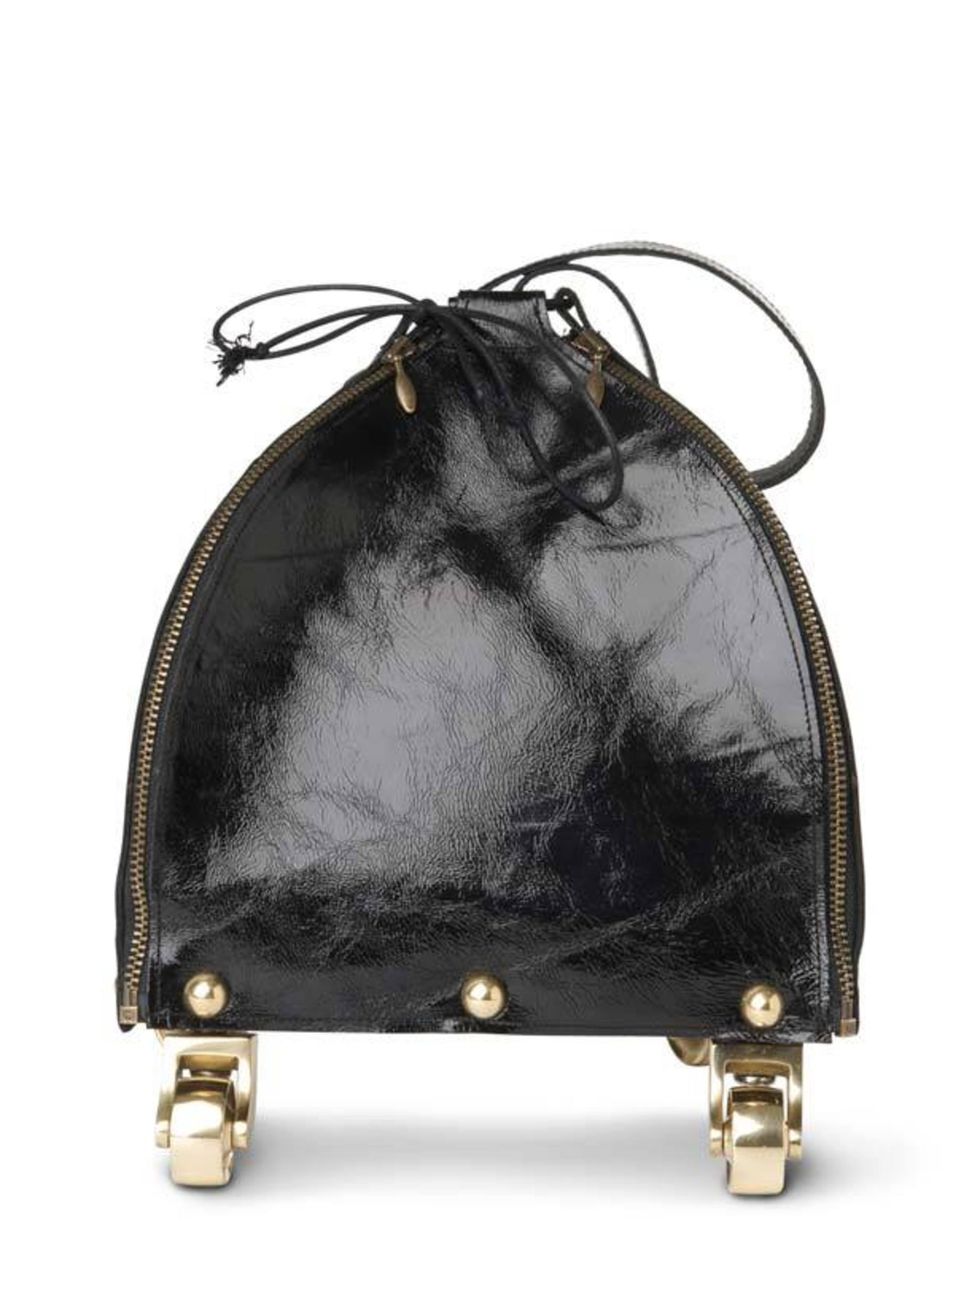 <p>Kei Kagami drawstring wheel bag, £320, at <a href="http://www.selfridges.com/en/Accessories/Categories/Handbags/Shoulder/Wheeled-drawstring-bag_133-3002085-B606/">Selfridges</a> </p>